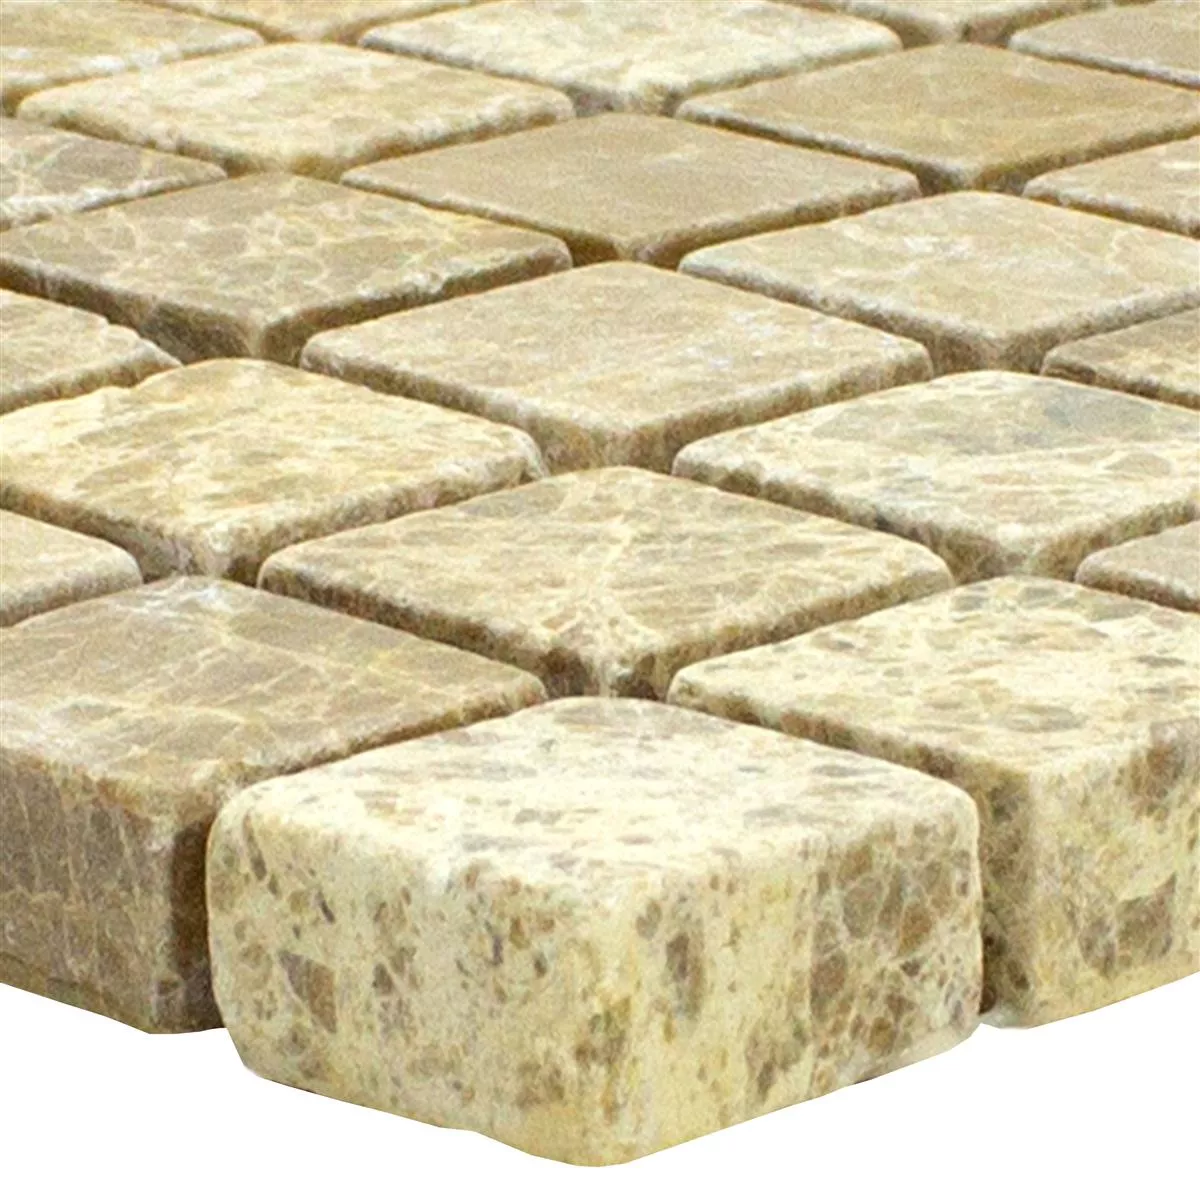 Sample Marble Natural Stone Mosaic Tiles Menia Beige